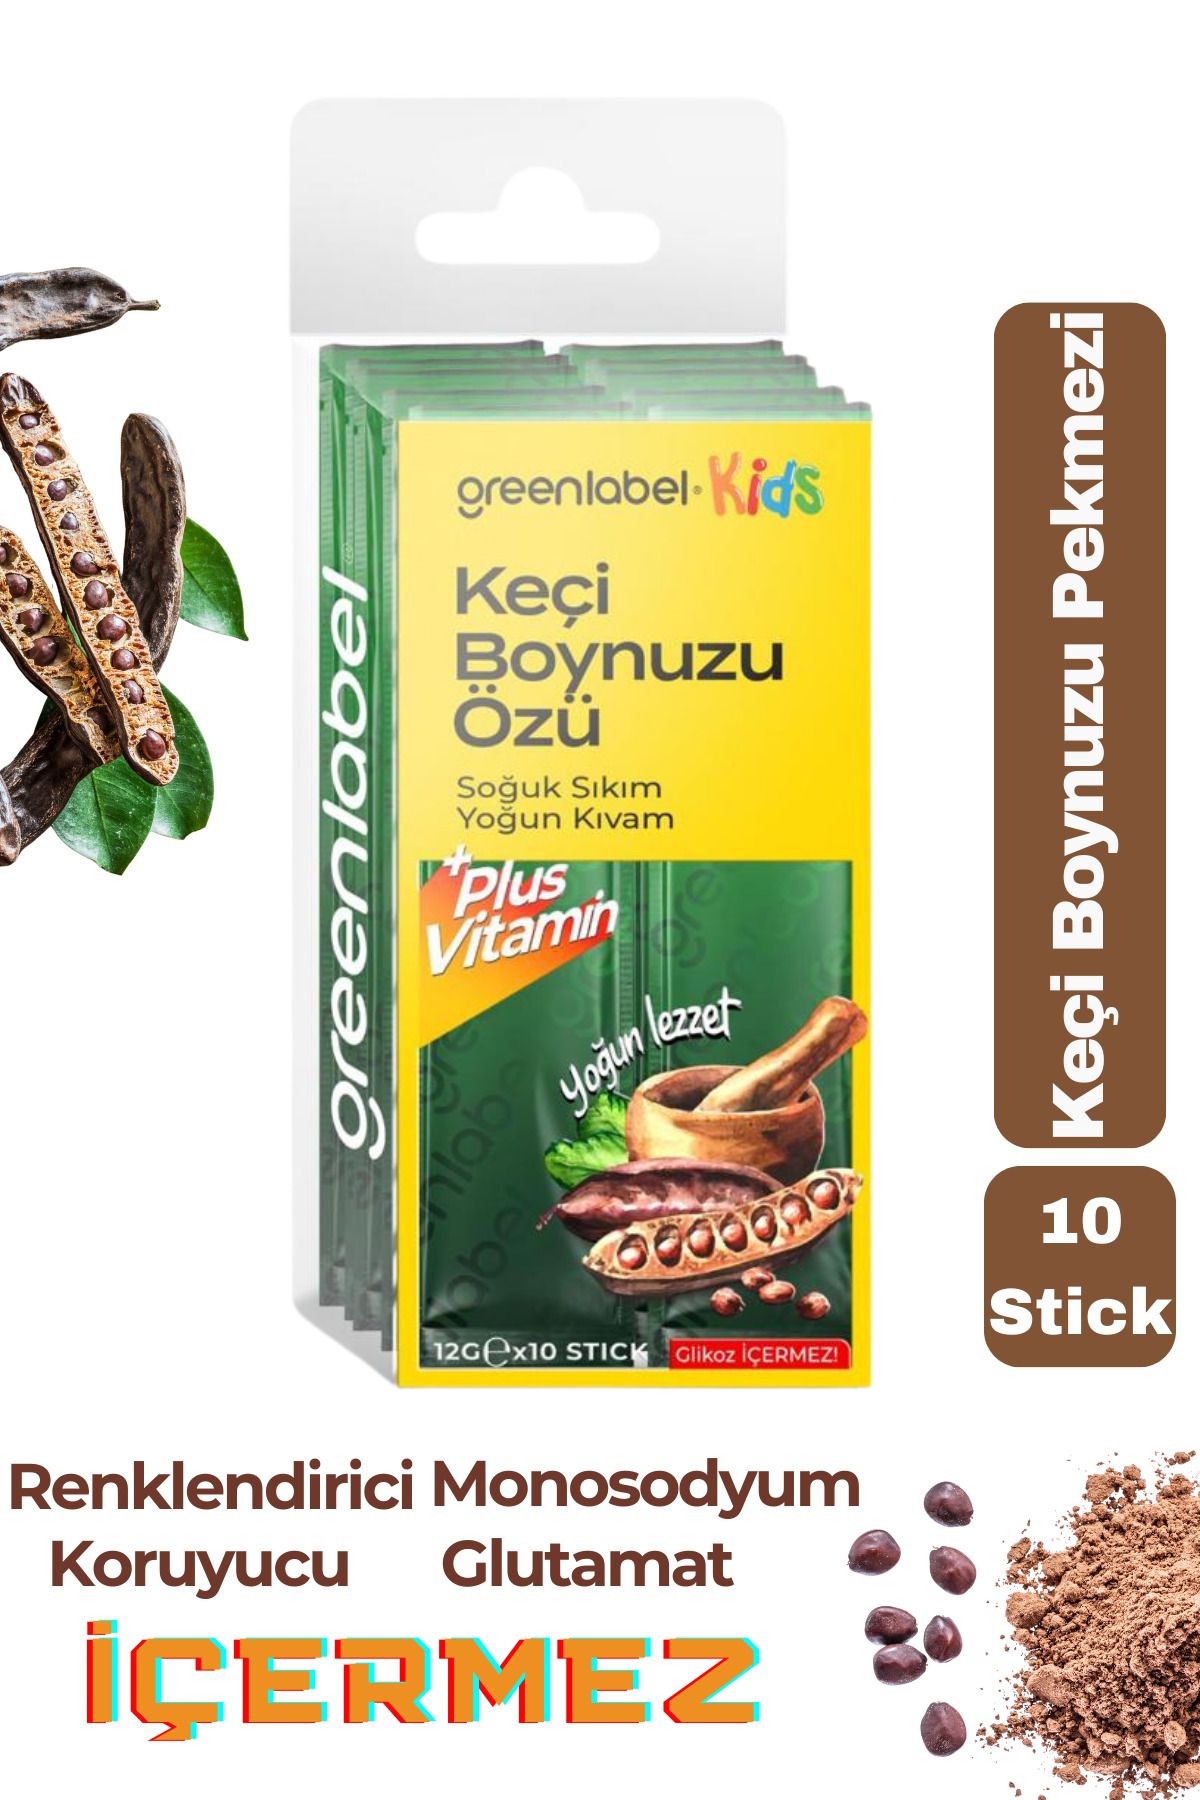 Green Label Greenlabel Kids Keçi Boynuzu Pekmezi 12gr. x 10 Adet Stick